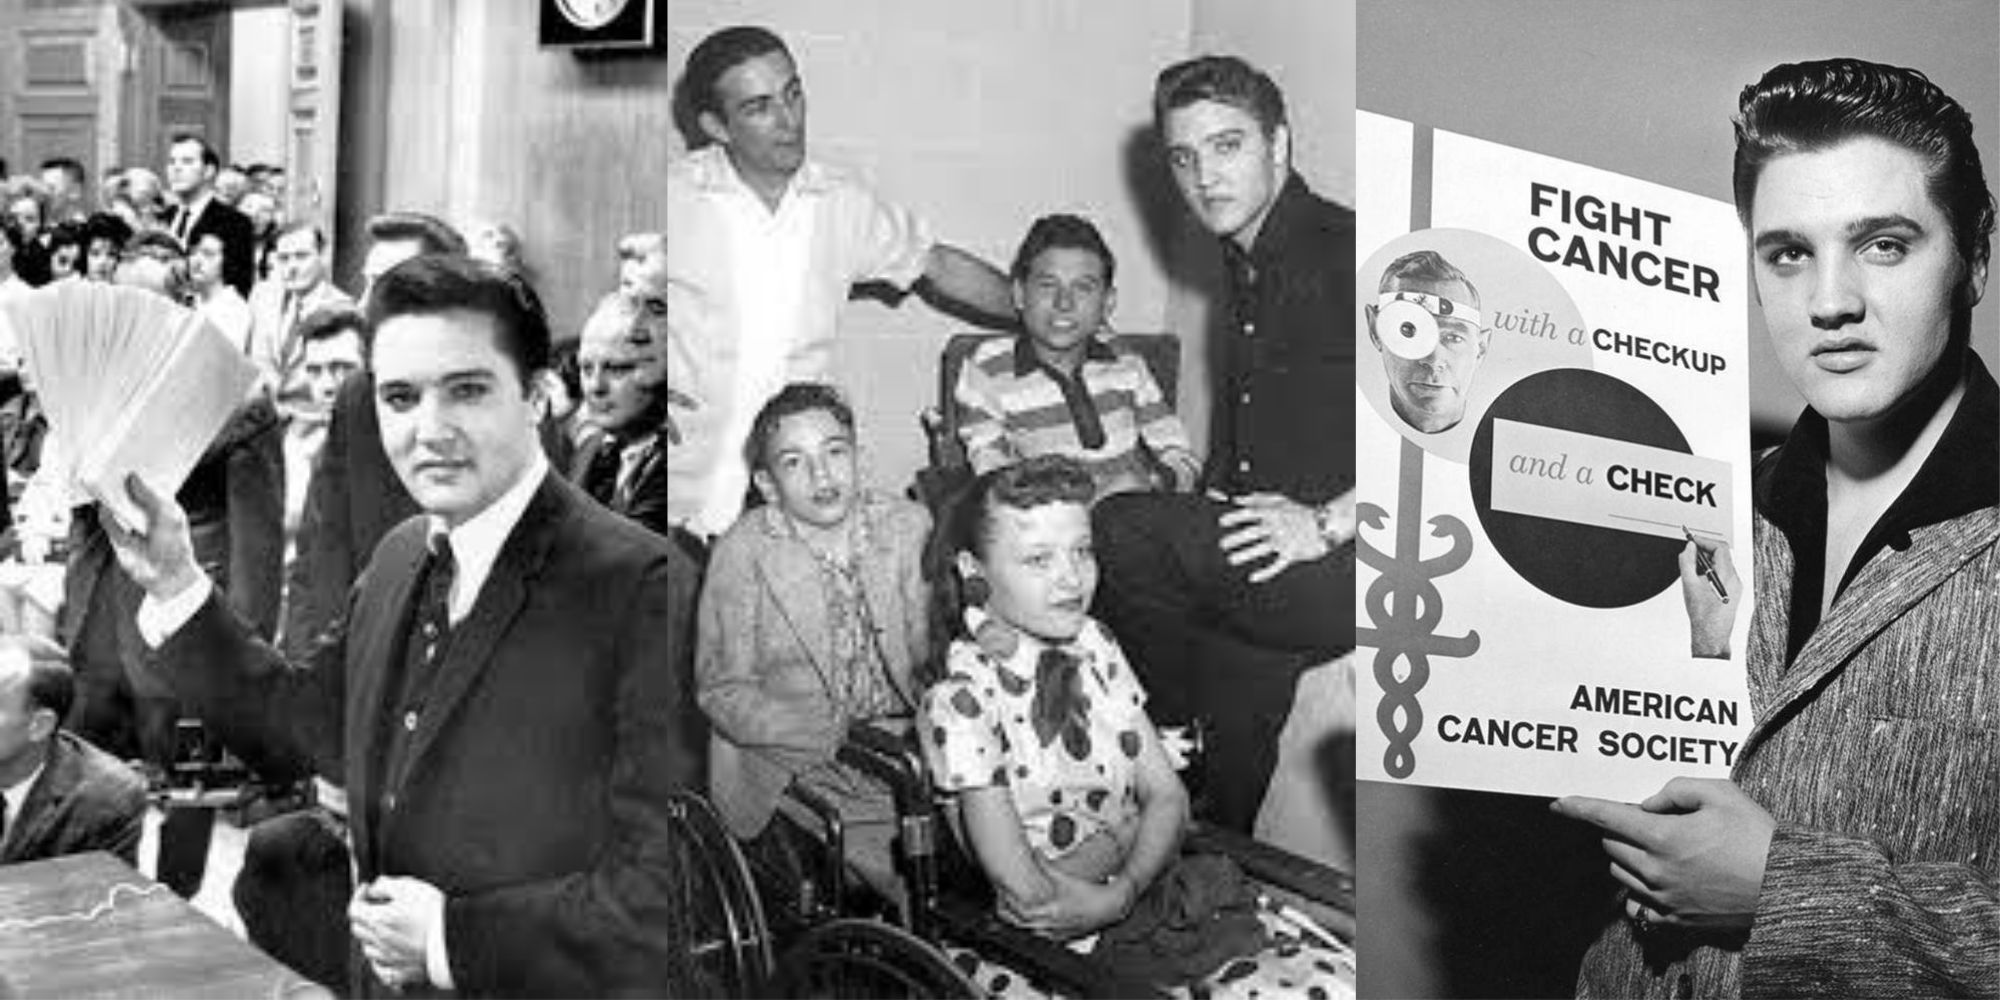 Elvis Presley and his charitable efforts